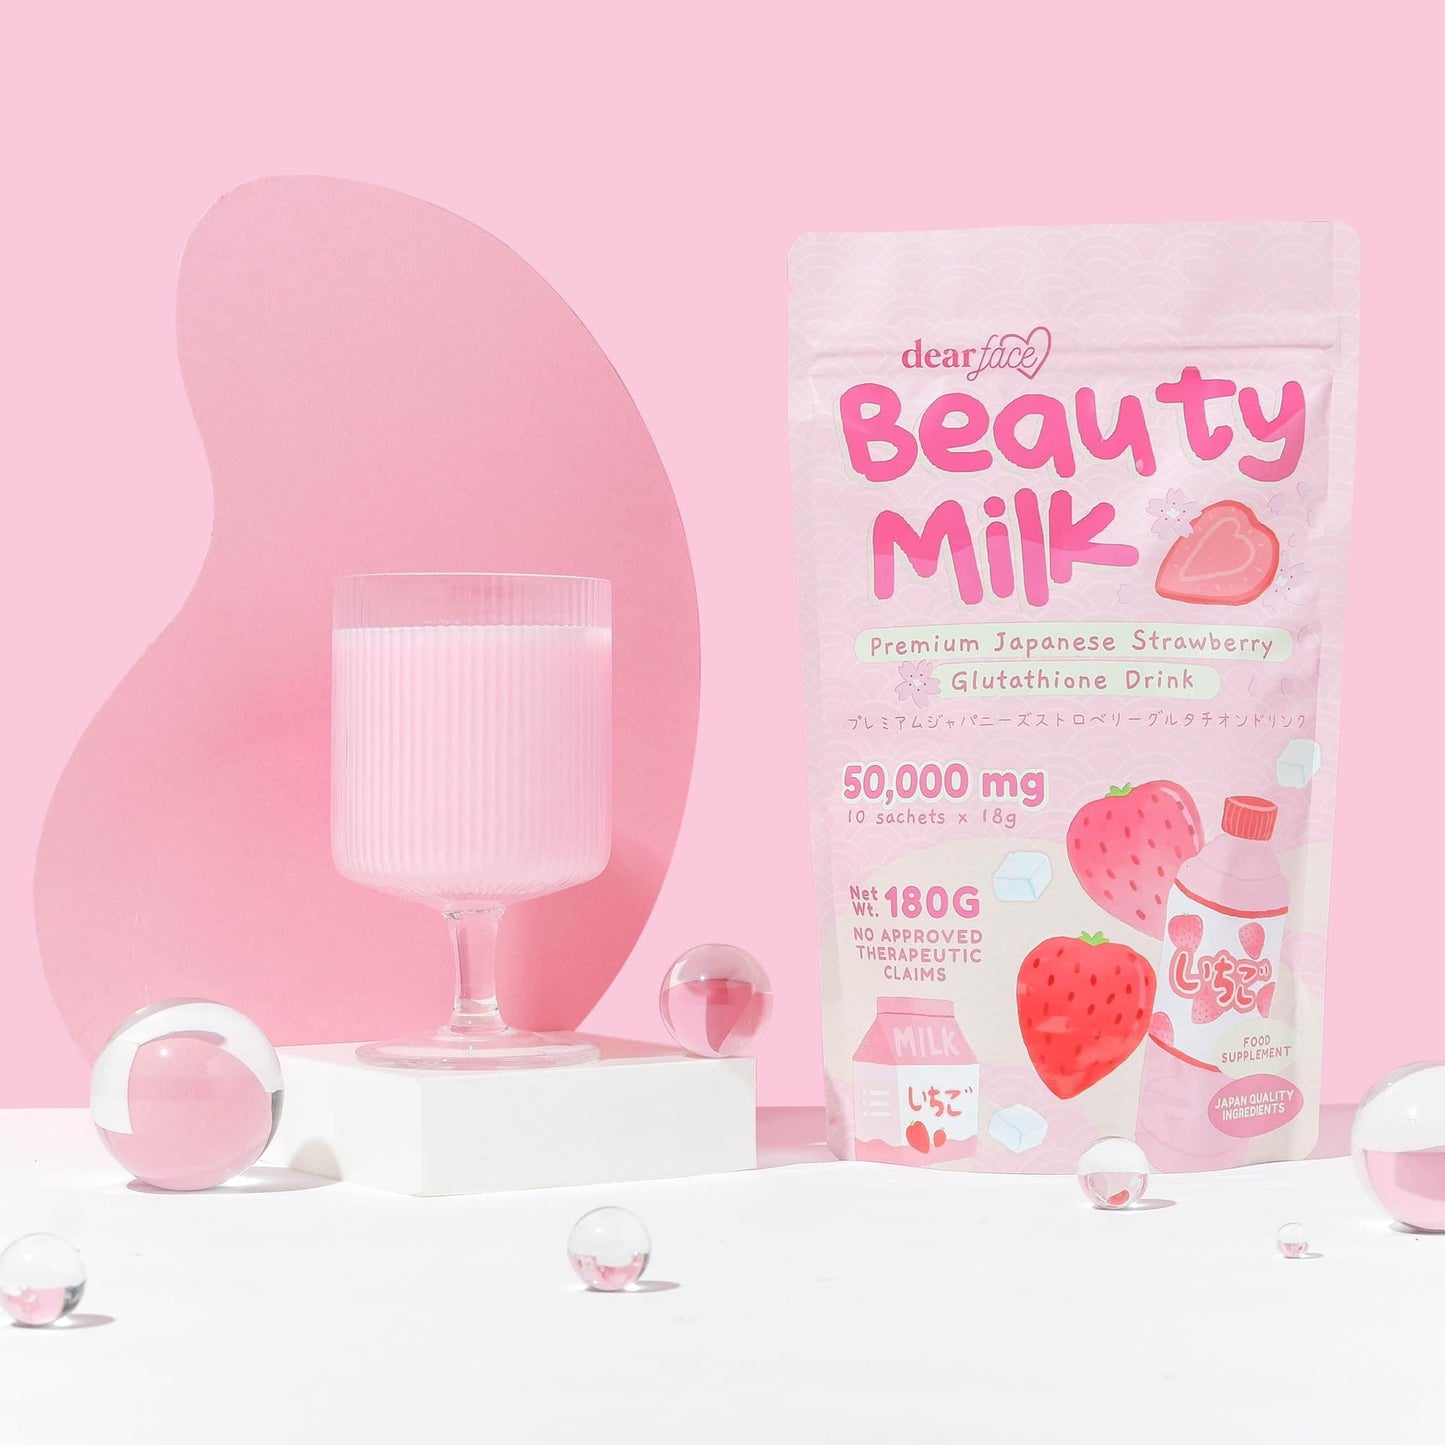 Dear Face Beauty Milk